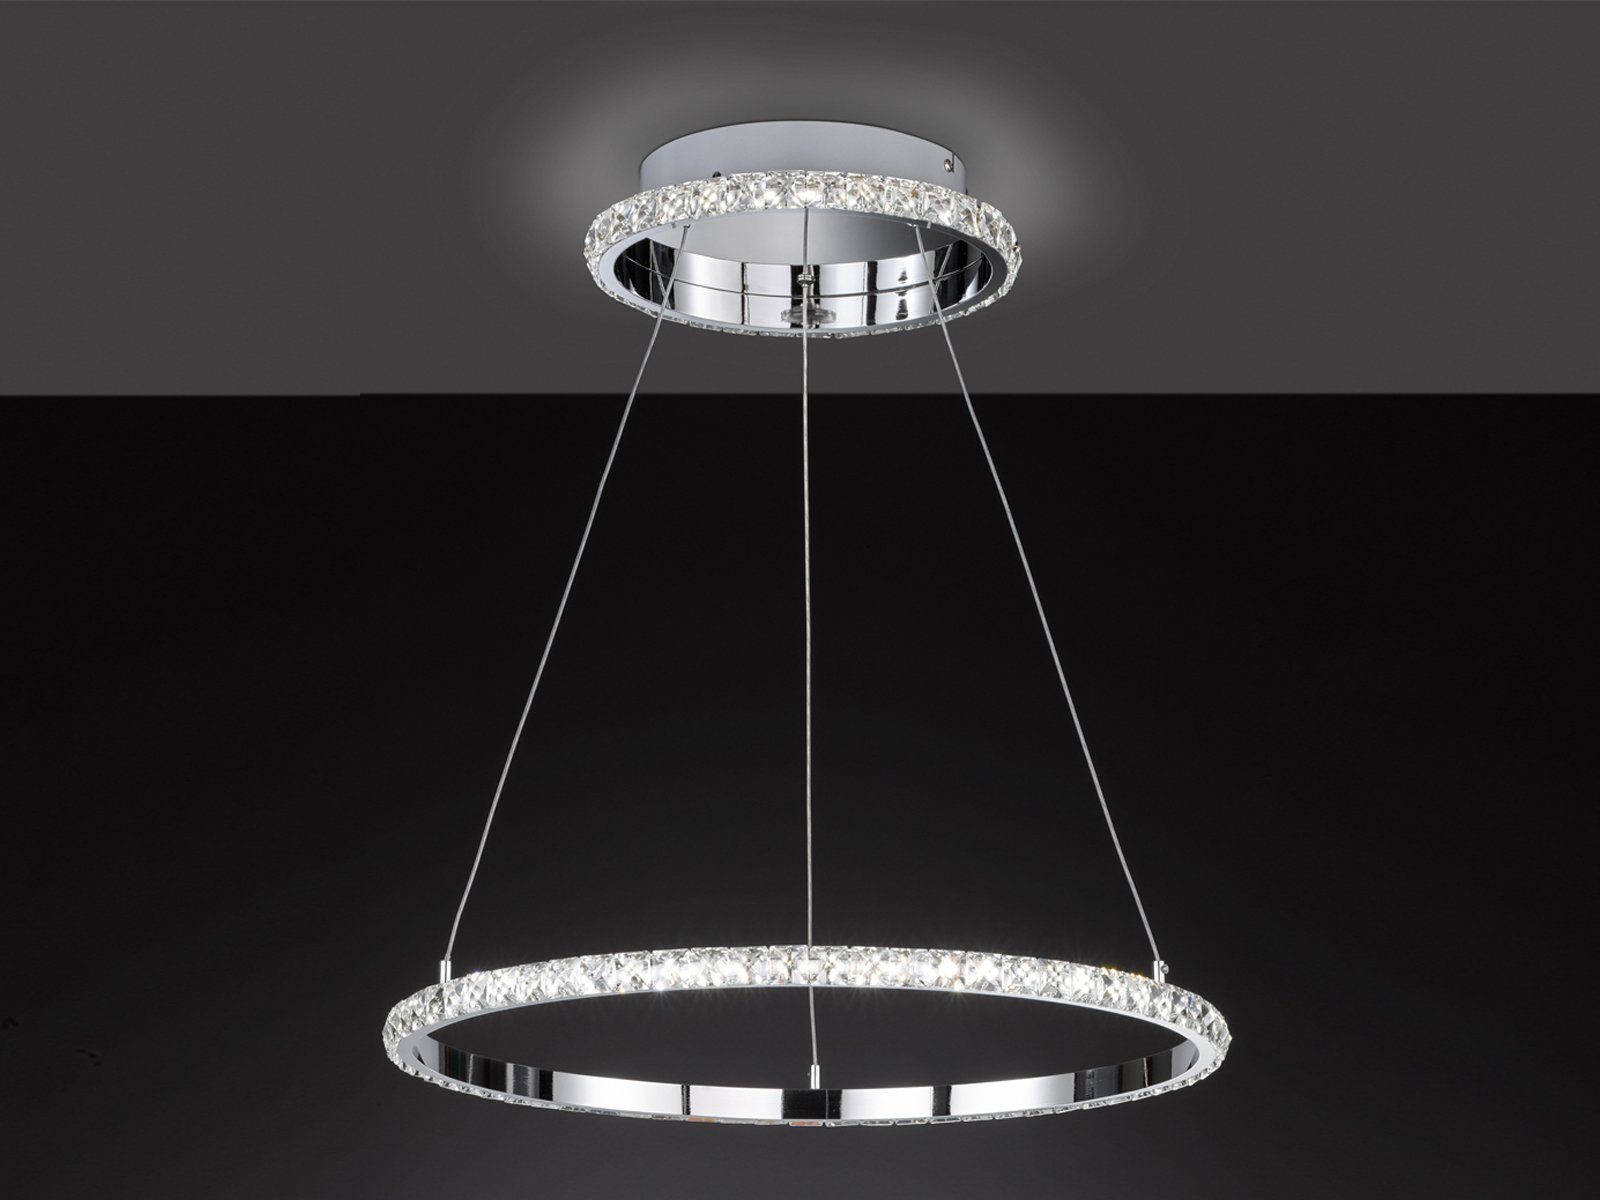 WOFI LED Pendelleuchte, Dimmer, LED fest integriert, Warmweiß, Esstisch dimmbar, große ausgefallene Galerie Ring-Lampe, Ø 60,5cm